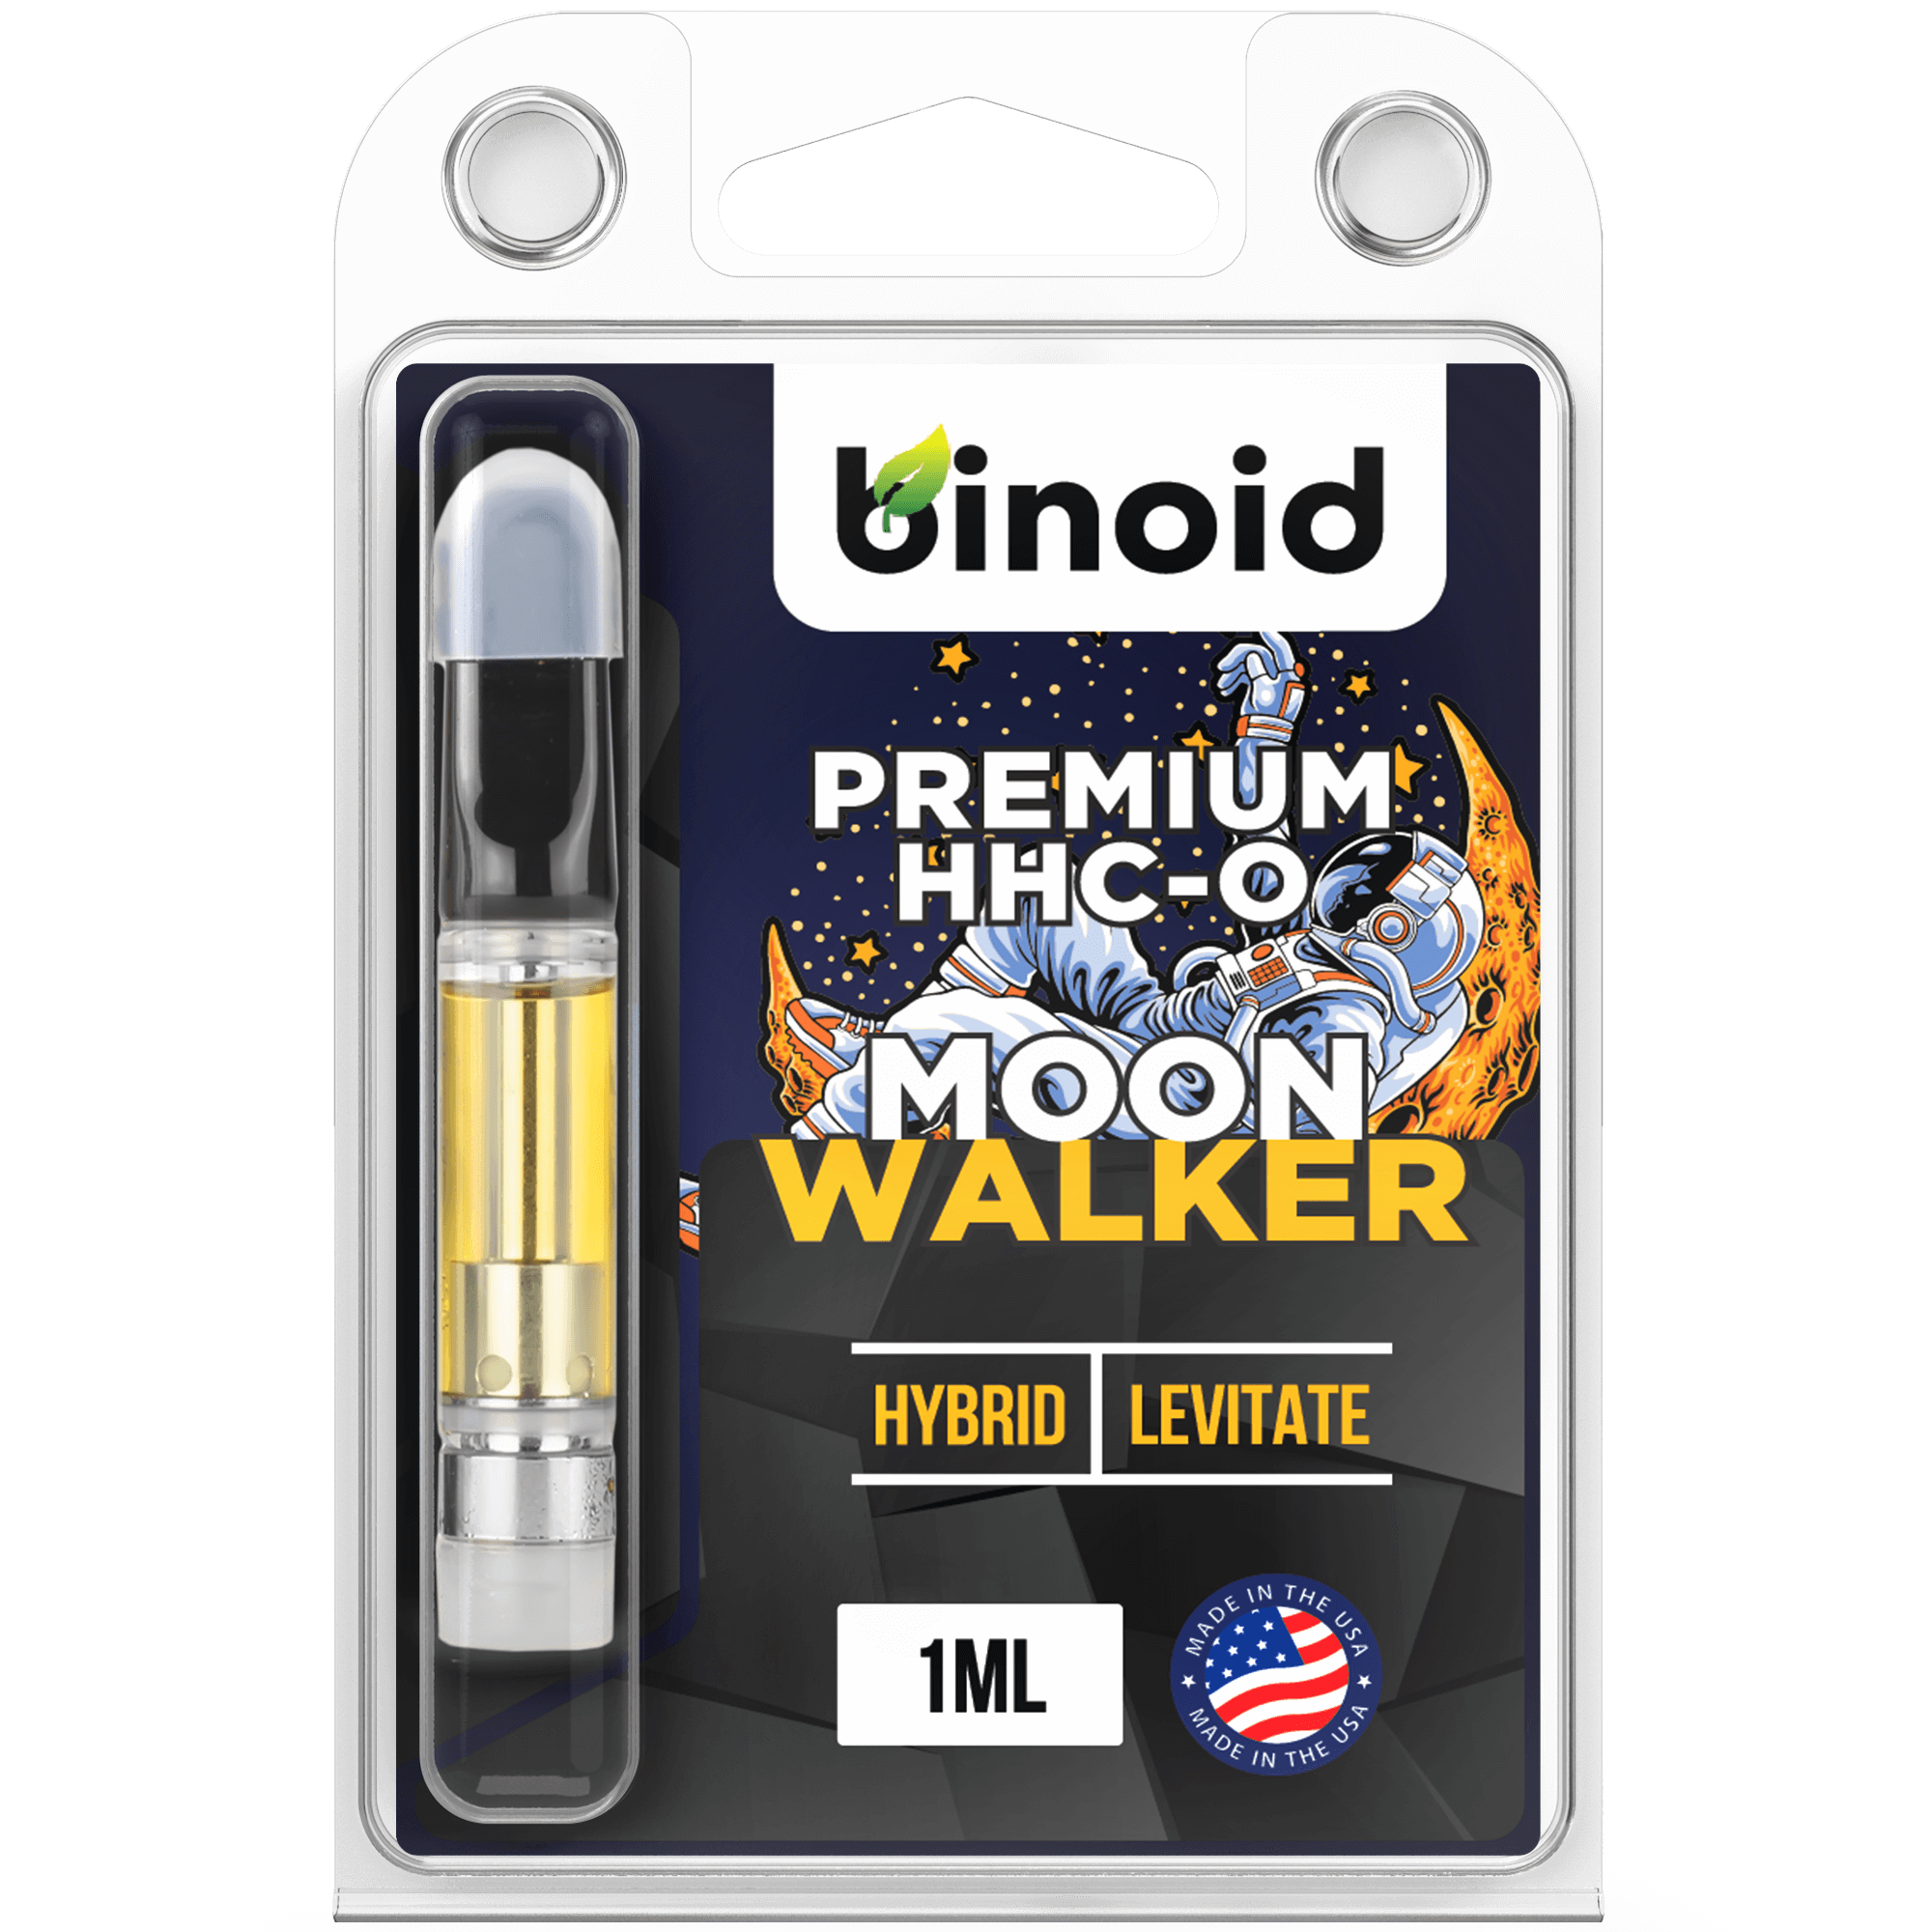 Binoid HHC-O Vape Cartridge - Moon Walker Best Price